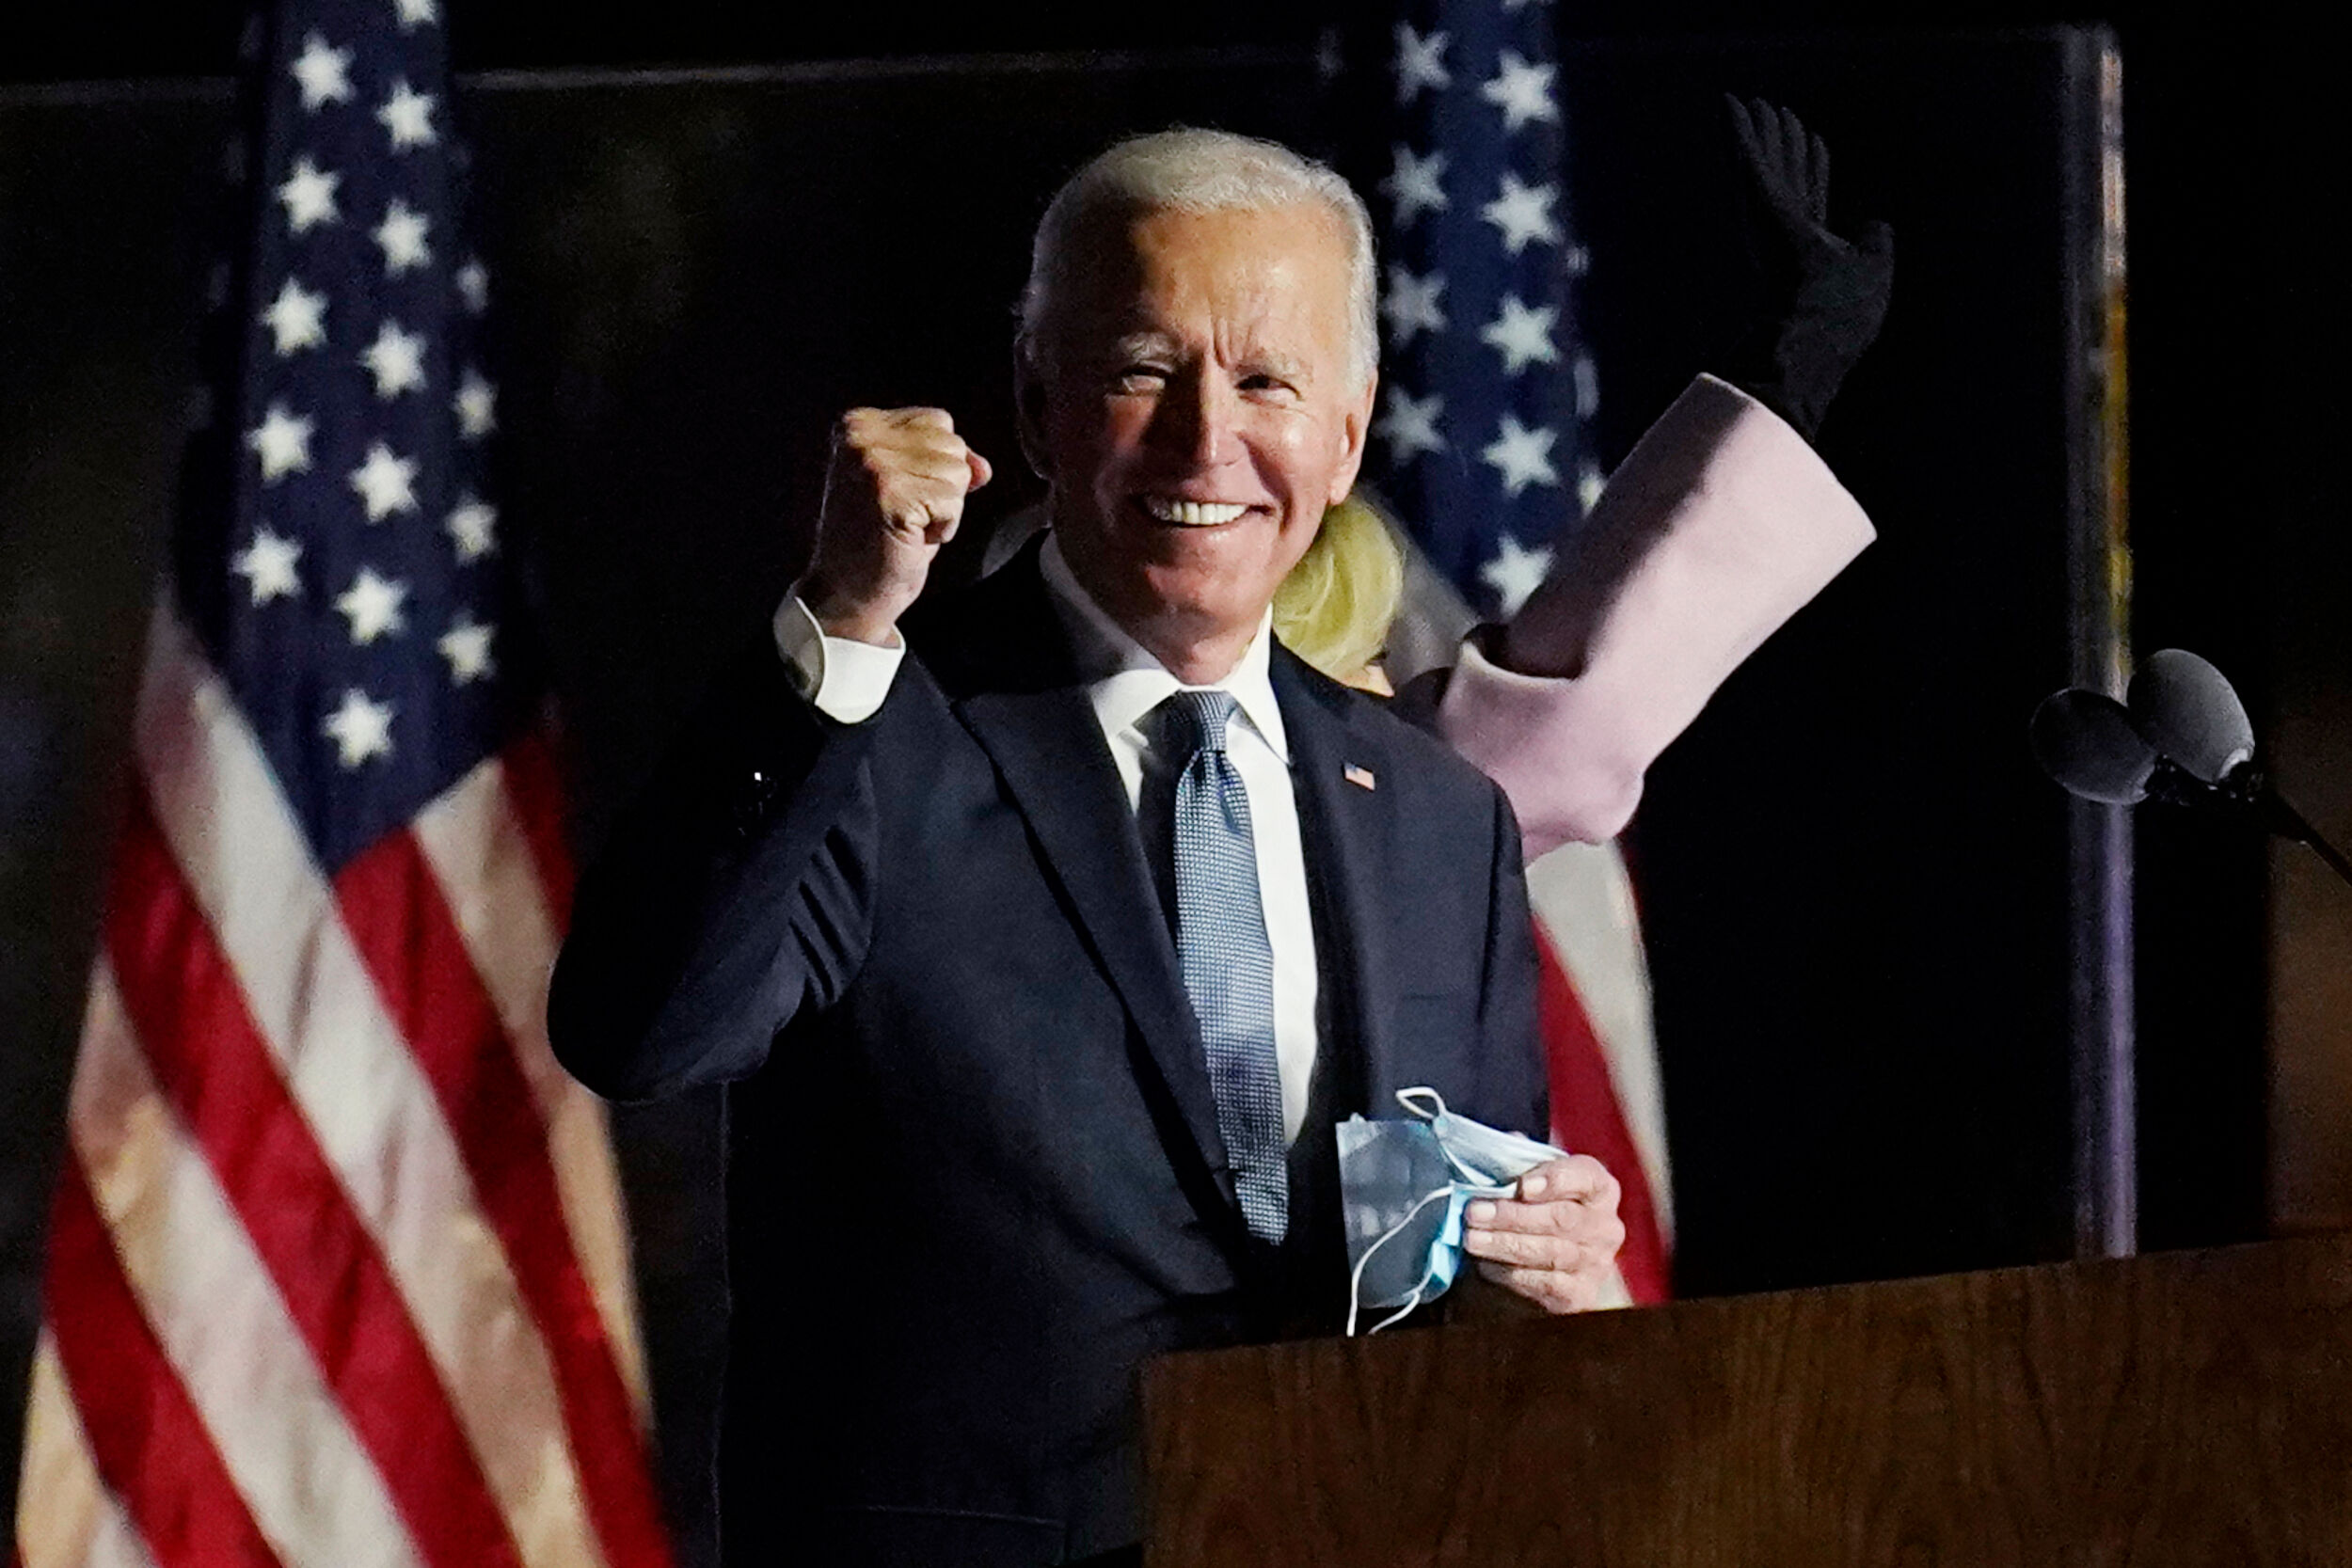 President Joe Biden takes no malarkey